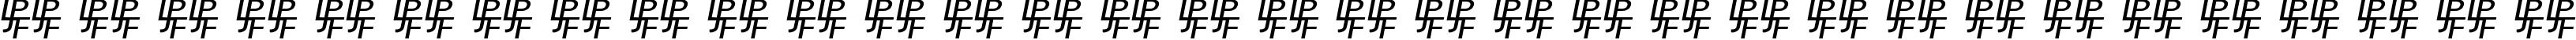 Пример написания русского алфавита шрифтом Peake Doubled